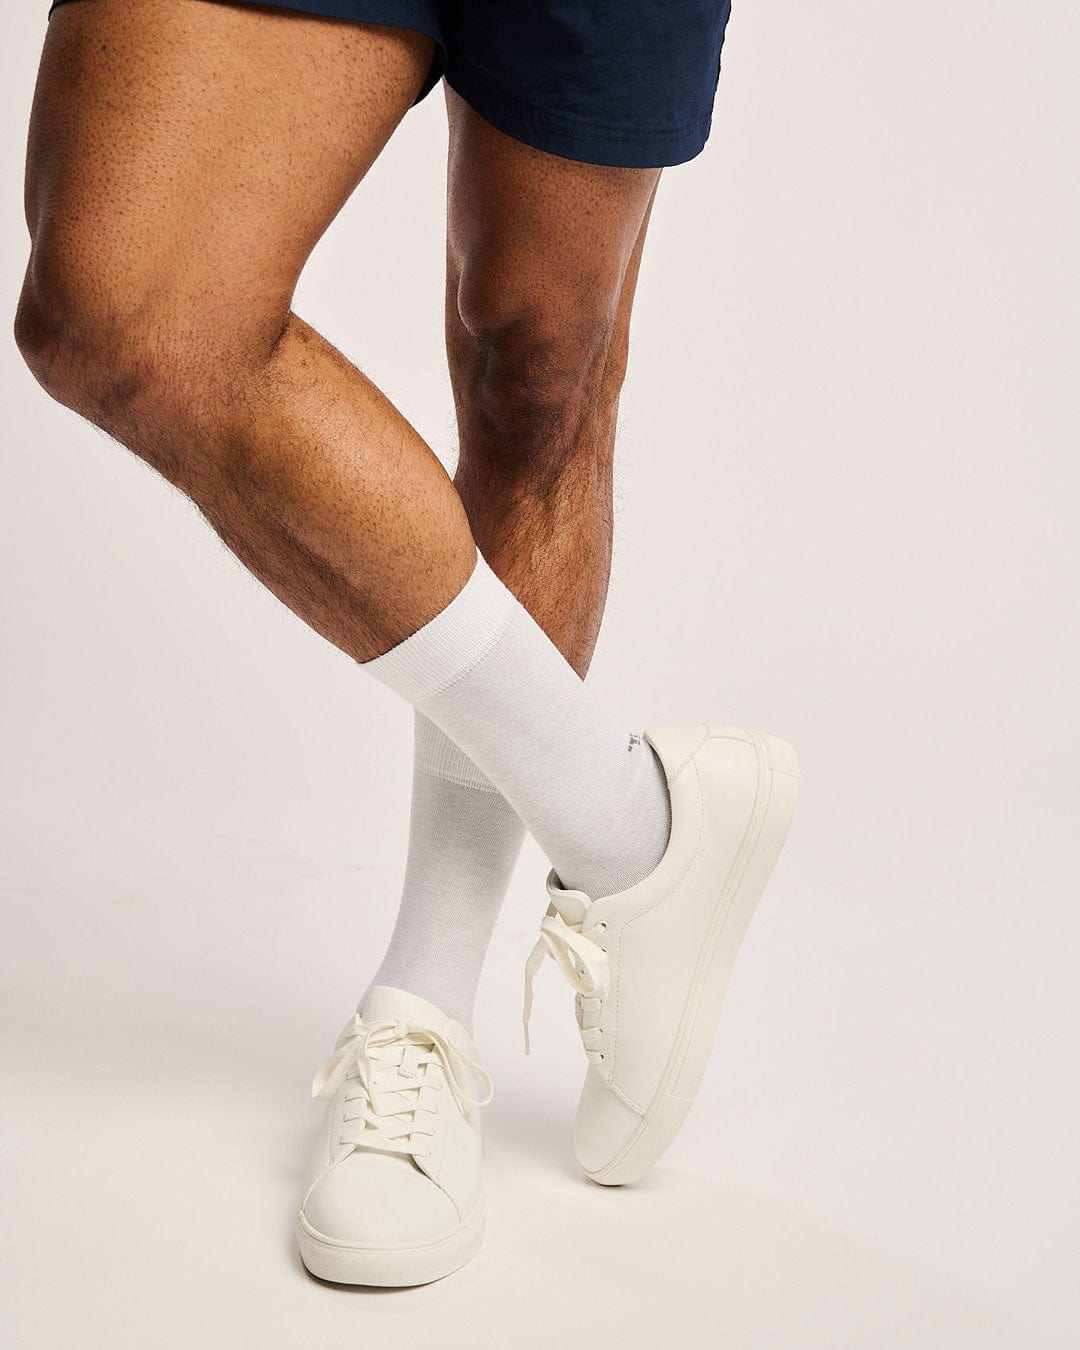 Seamless toe socks in white. Classic white luxury socks